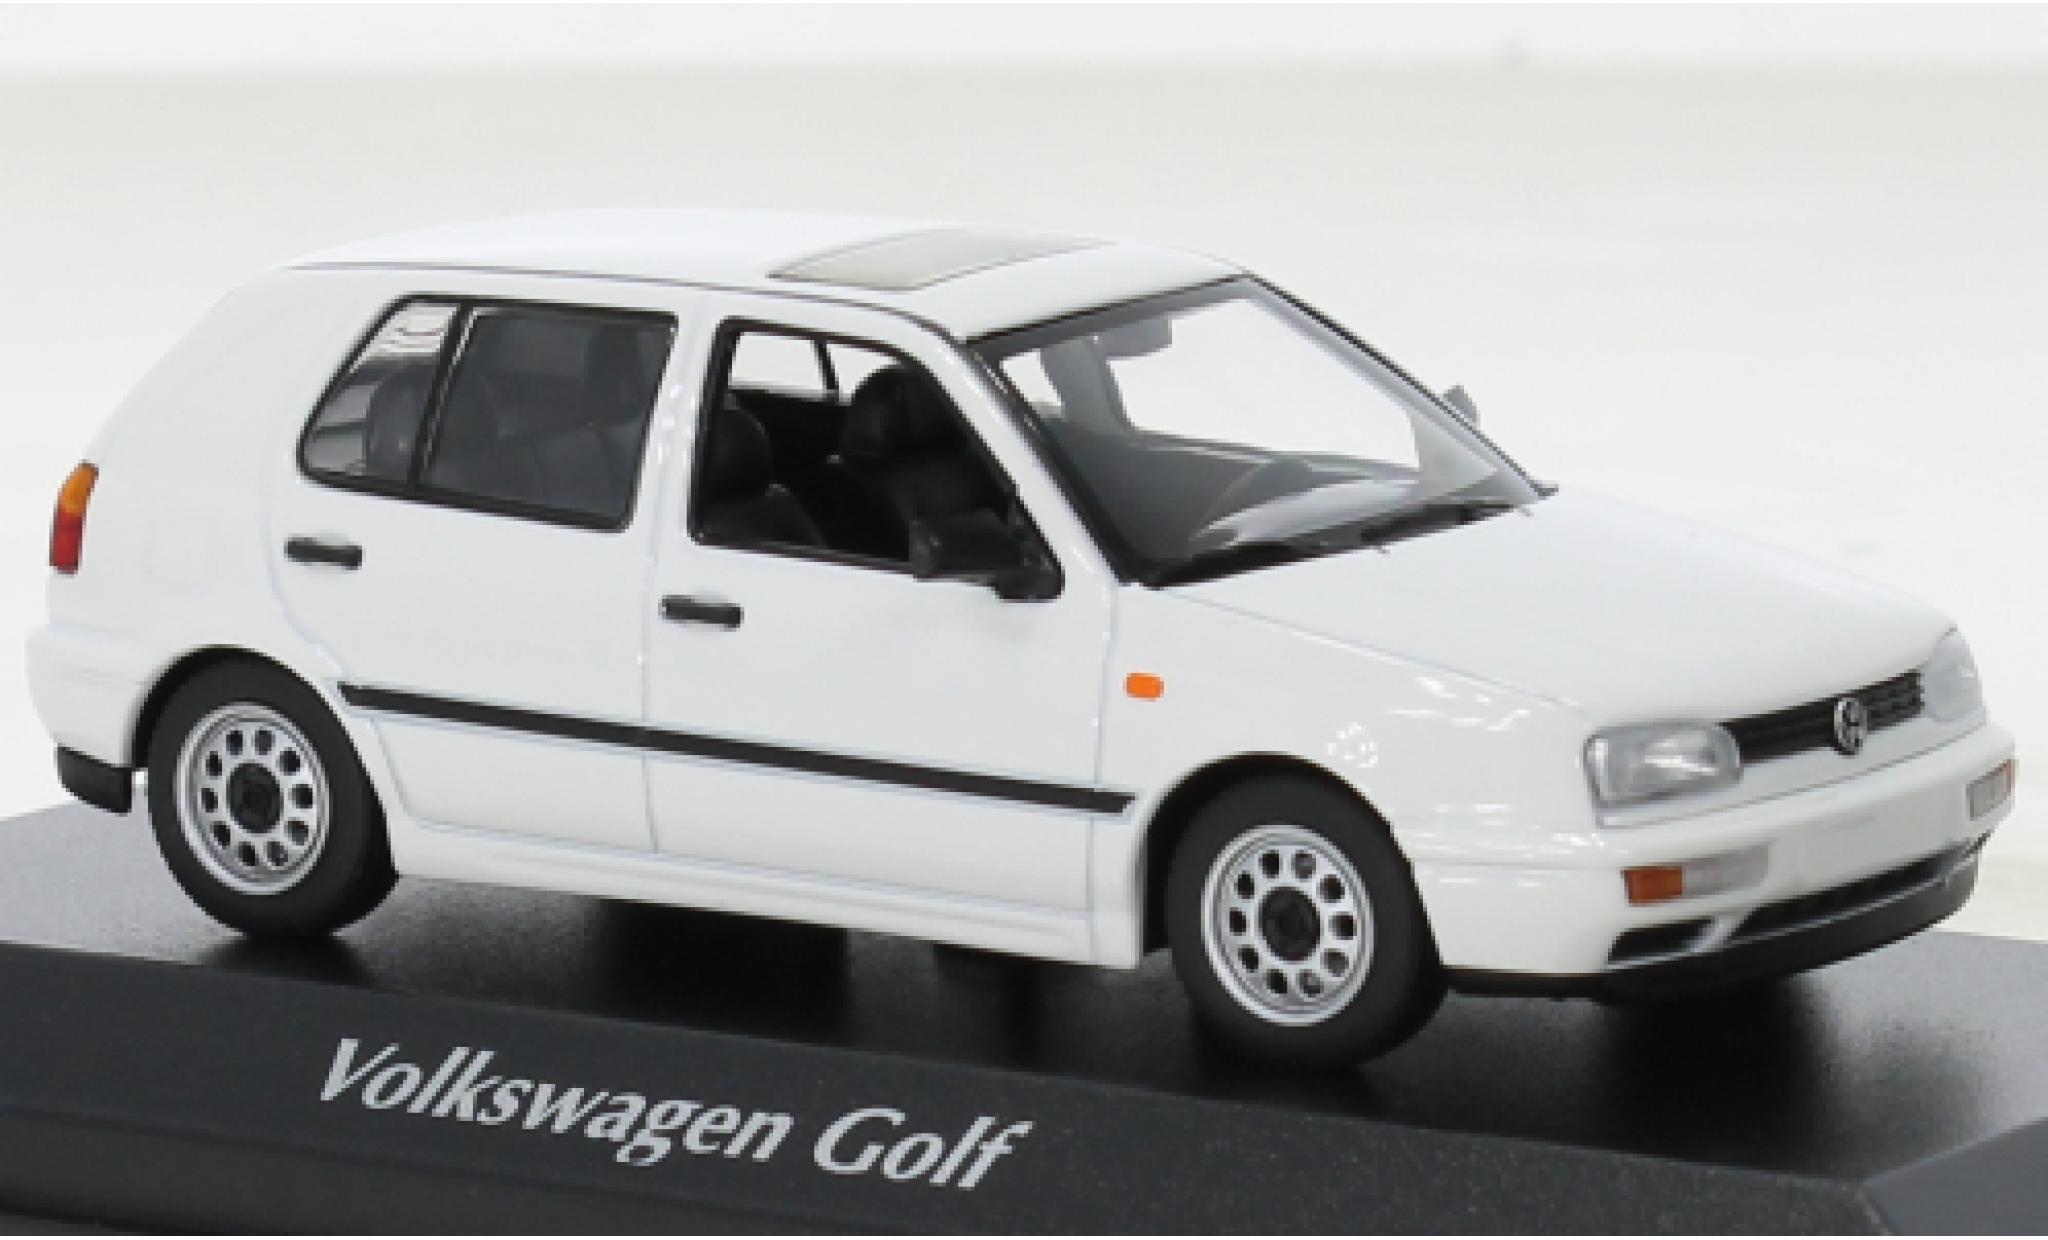 Volkswagen Golf III blanche (Maxichamps) 1/43e - Minicarweb